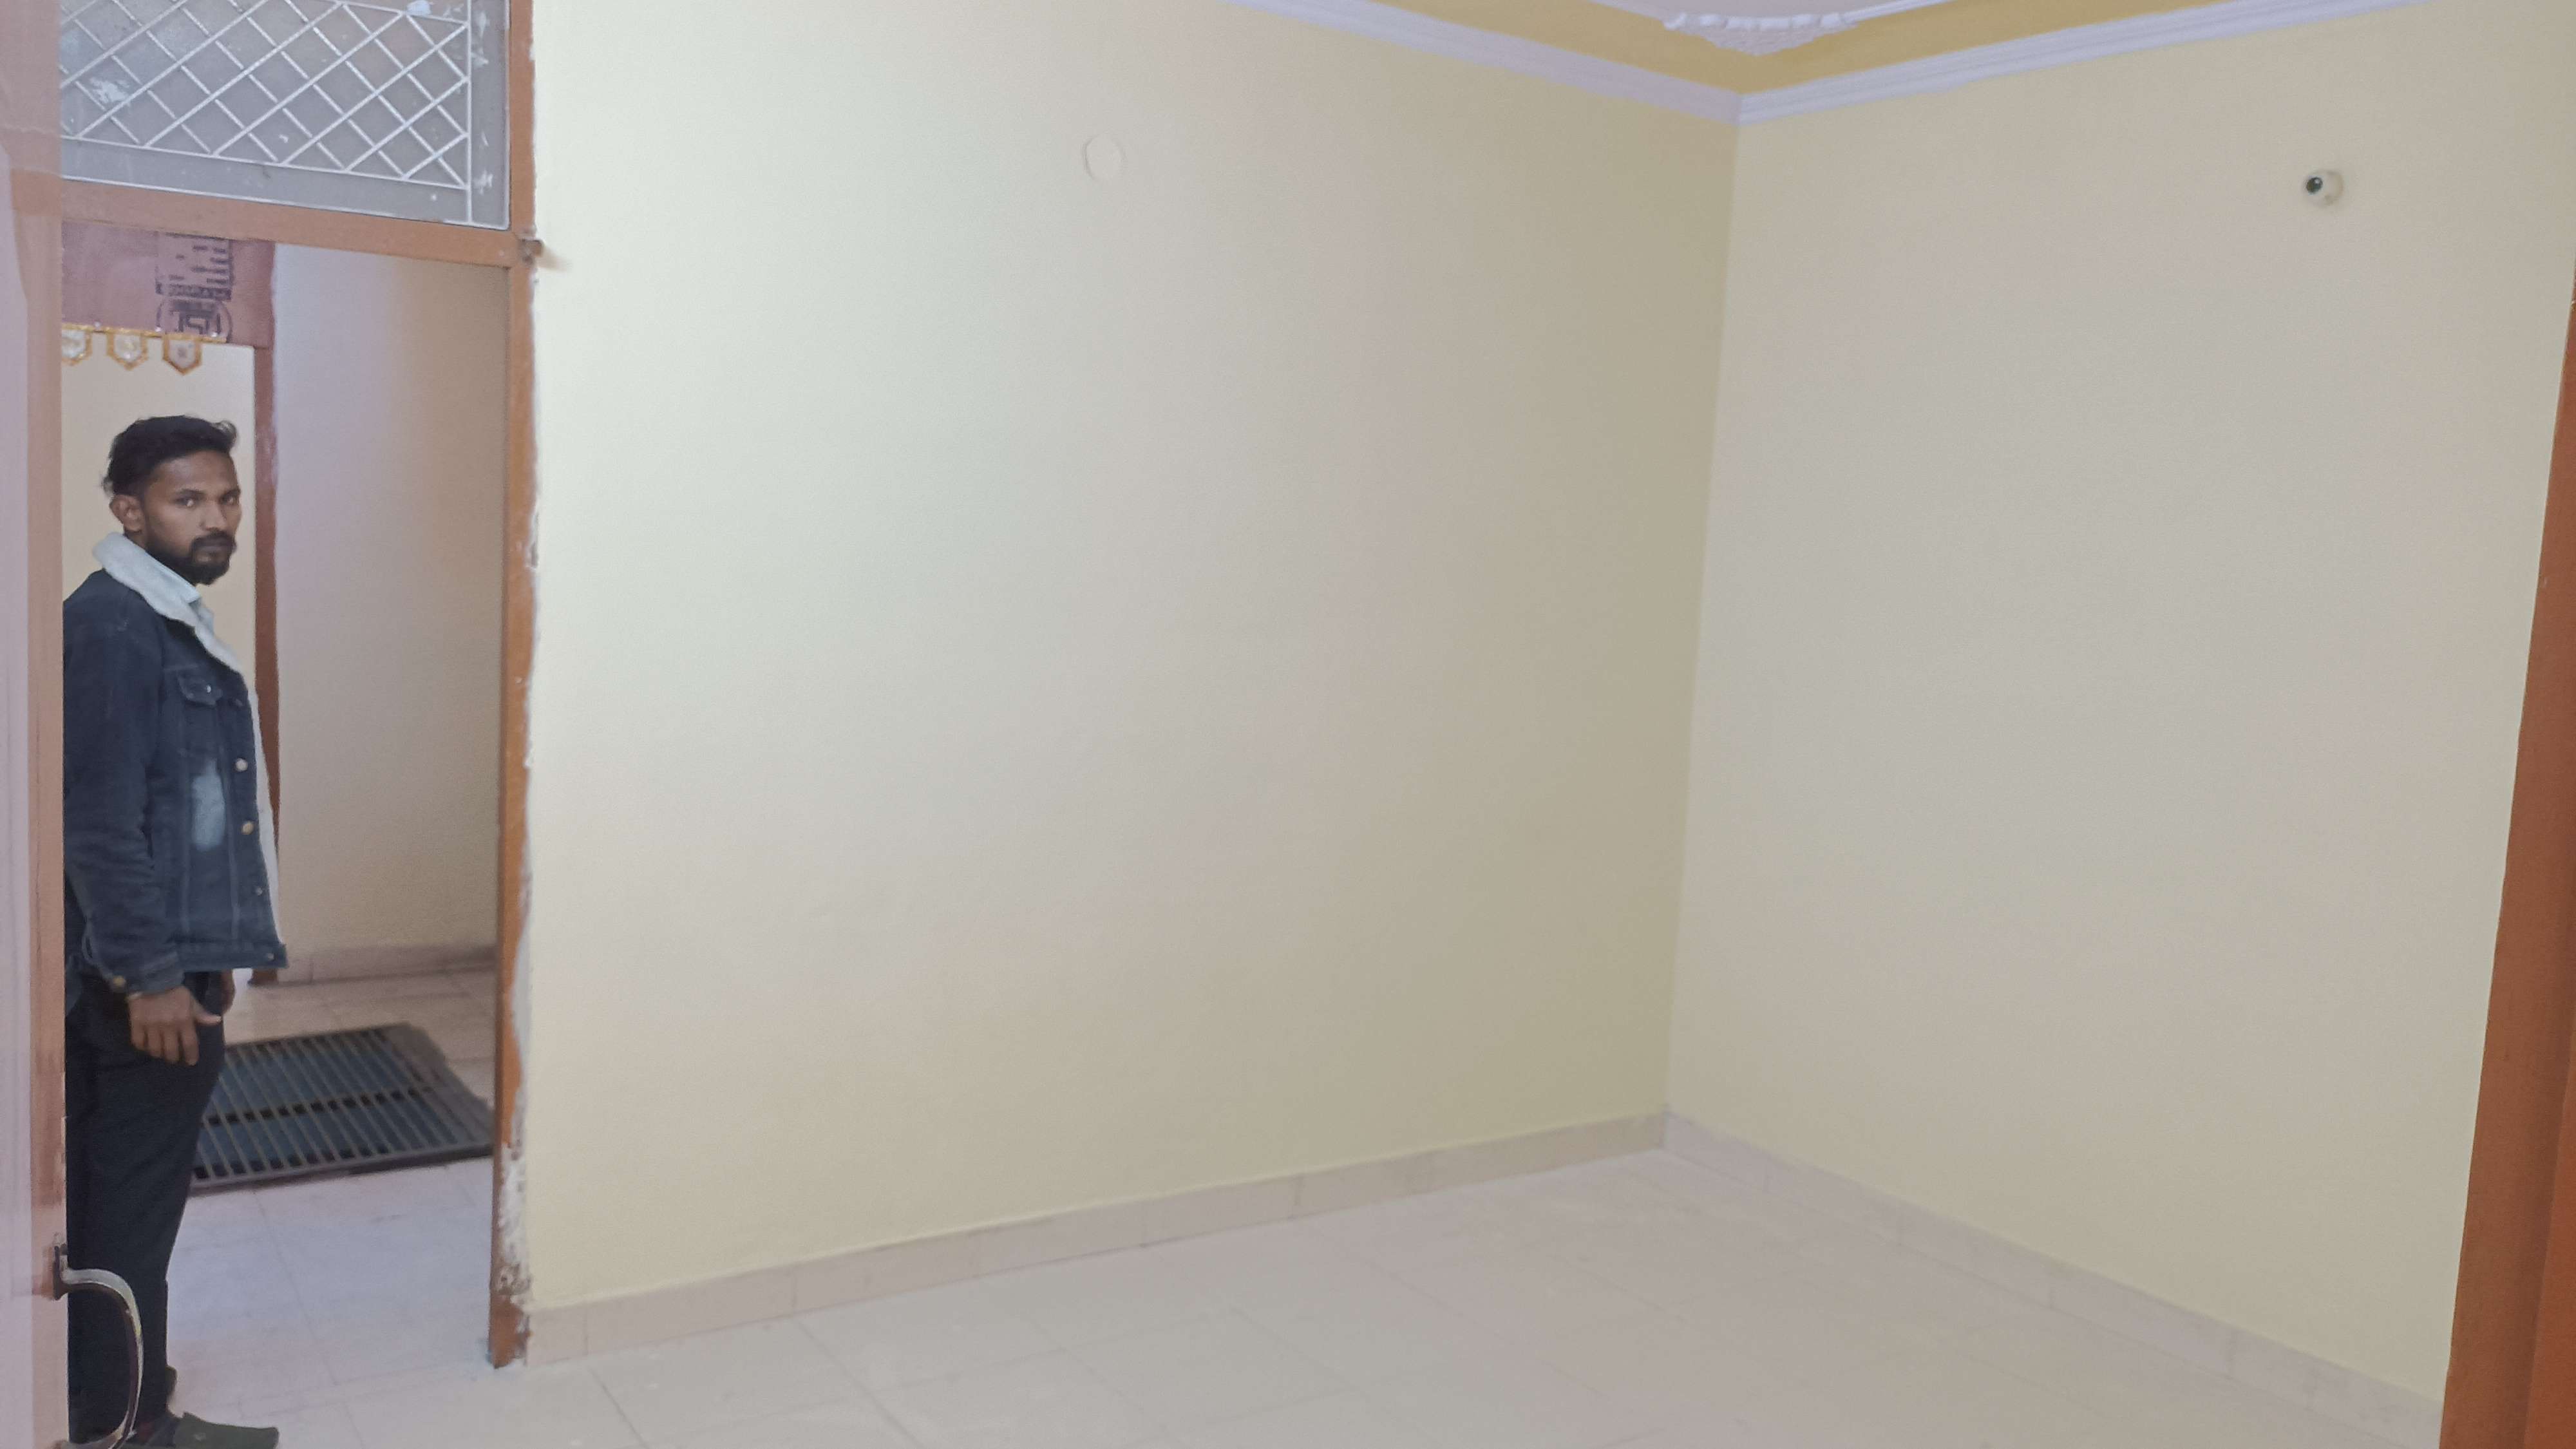 1 BHK Builder Floor For Rent in Radheypuri Delhi 6201109